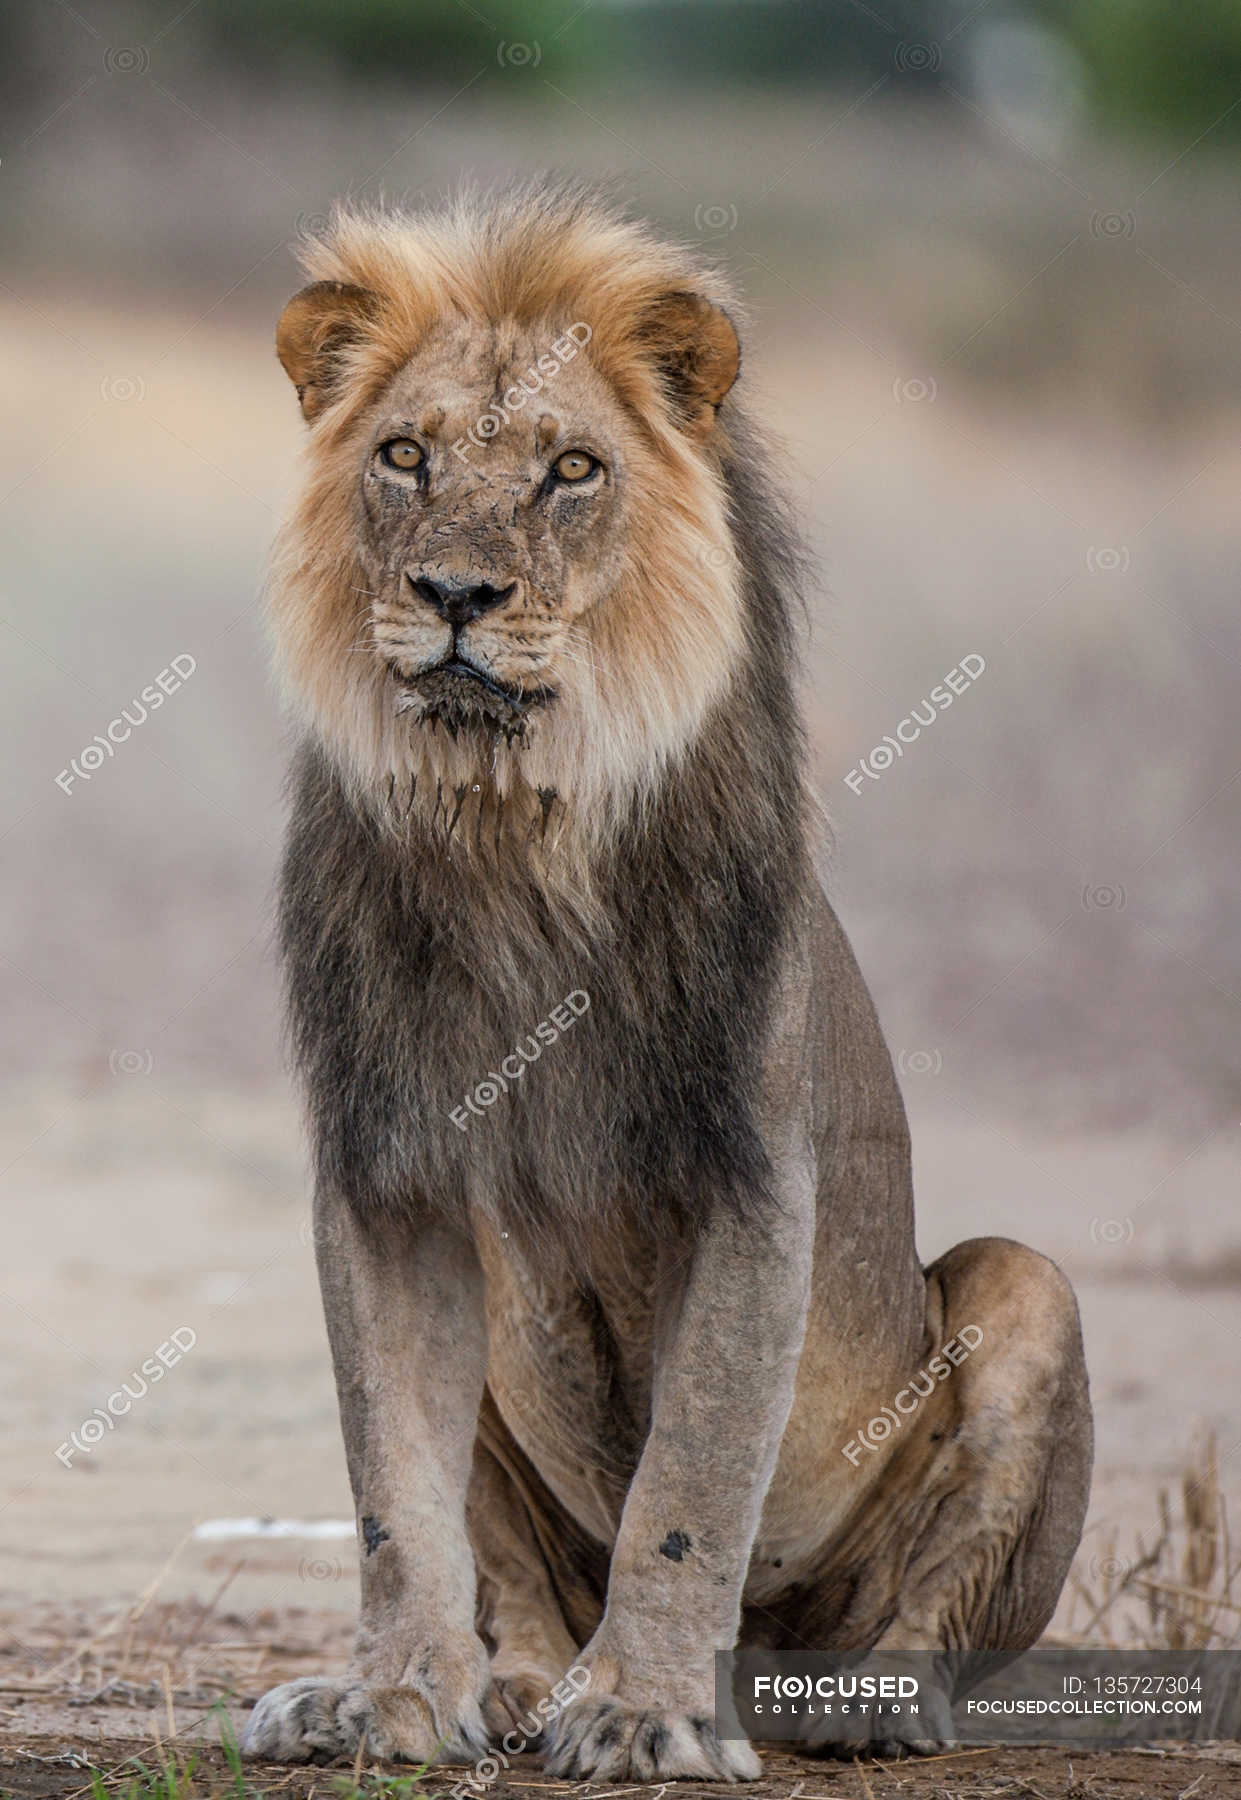 black mane lion